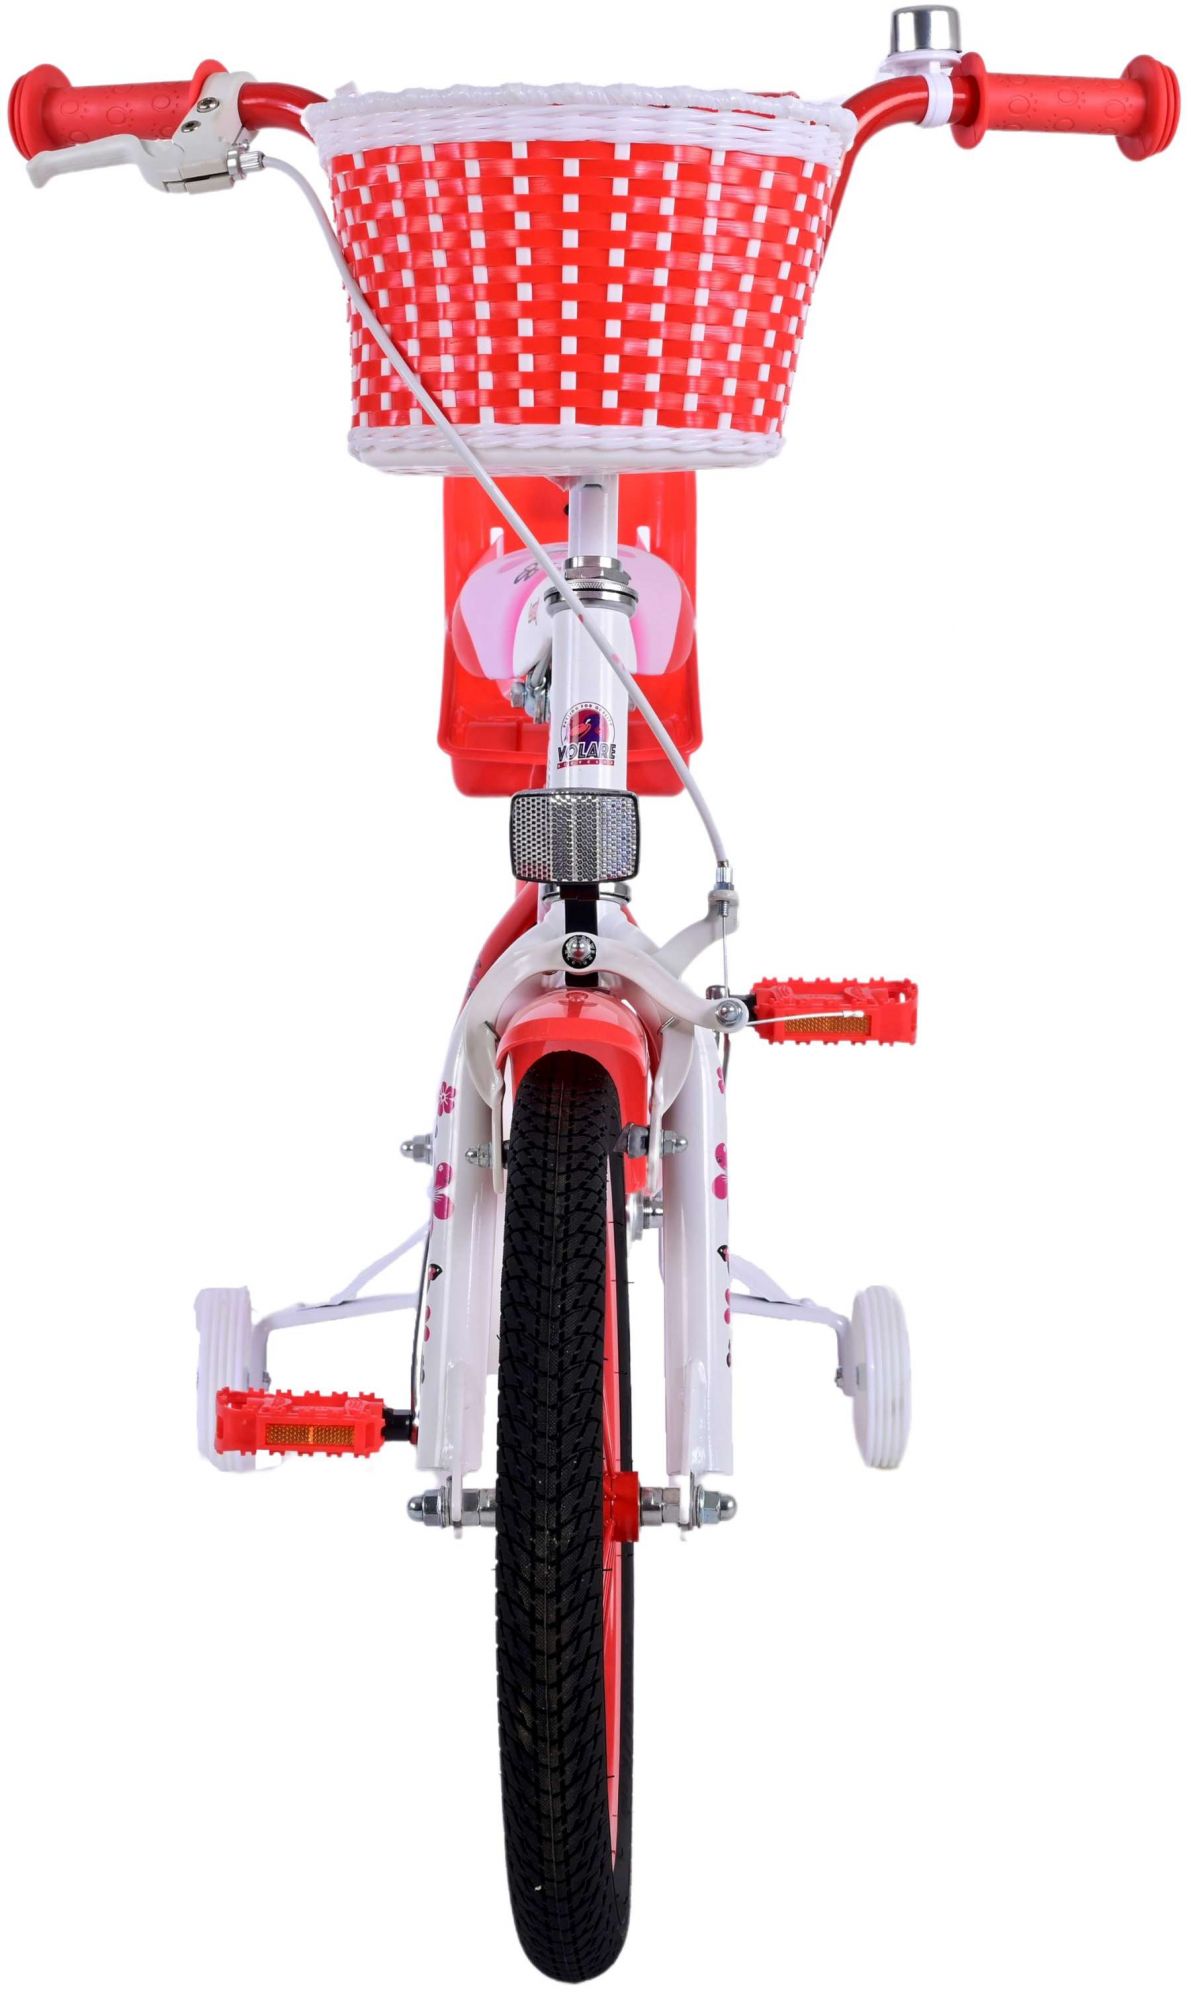 Kinderfahrrad Lovely Fahrrad für Mädchen 16 Zoll Kinderrad in Rot Weiß